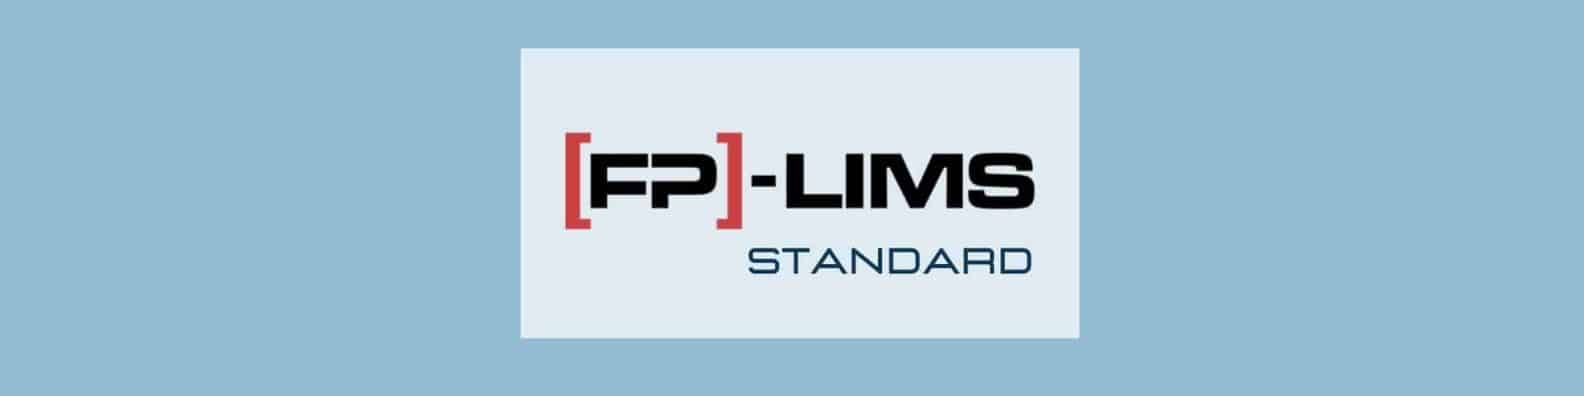 FP-LIMS-STANDARD